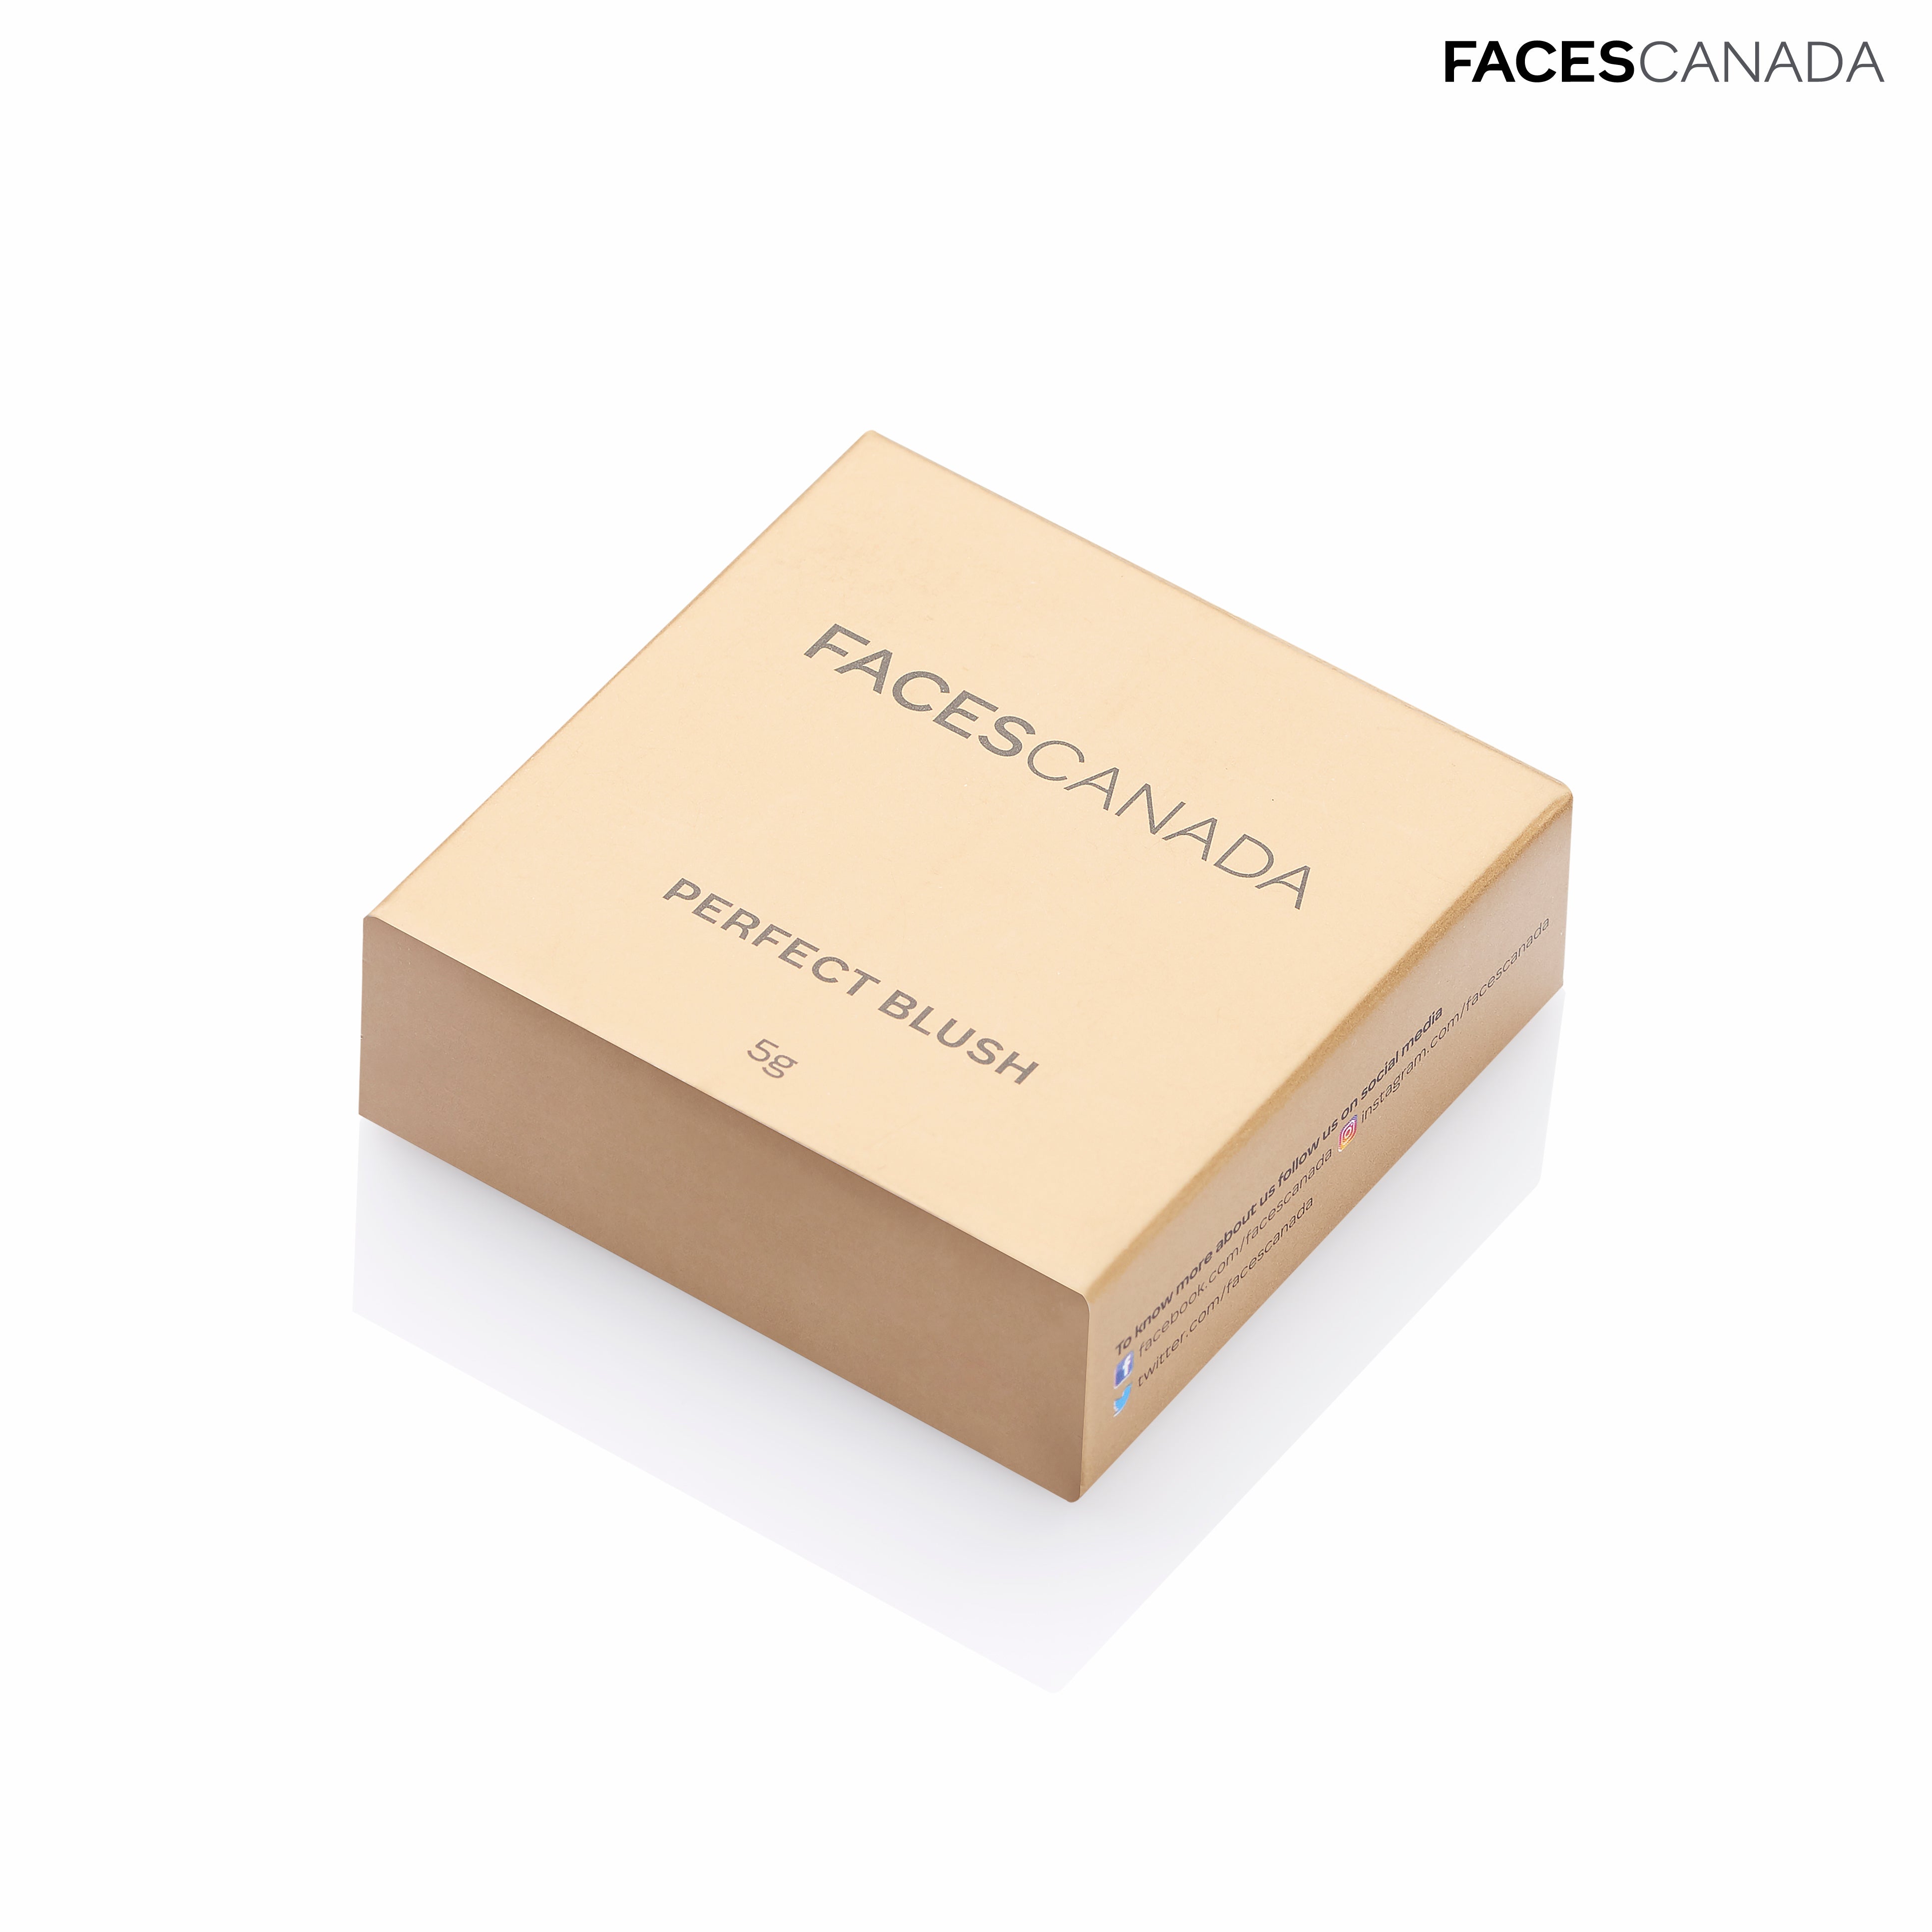 Faces Canada Perfect Blush (5g) Faces Canada